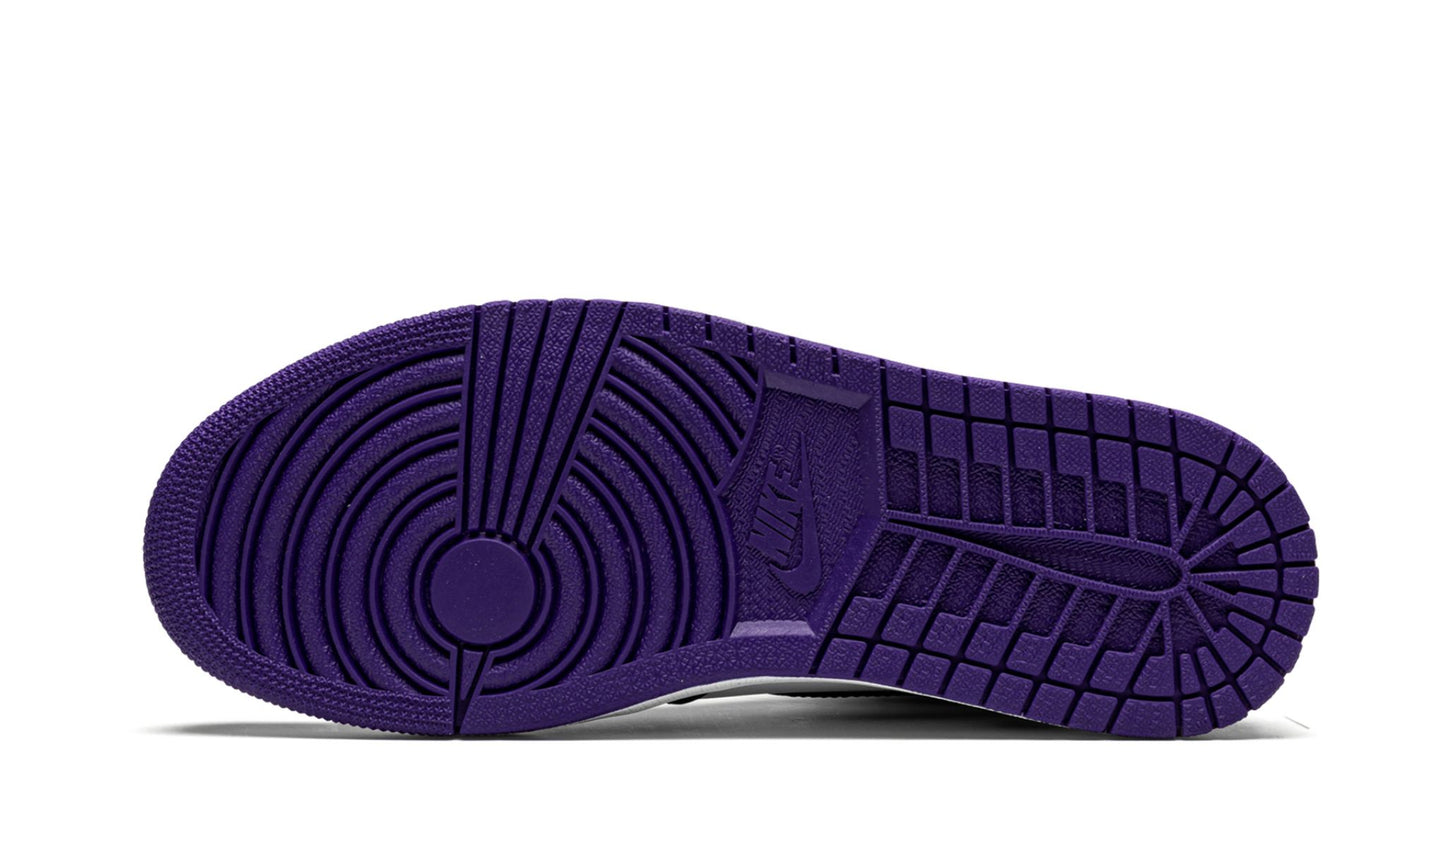 Air Jordan 1 High Court Purple